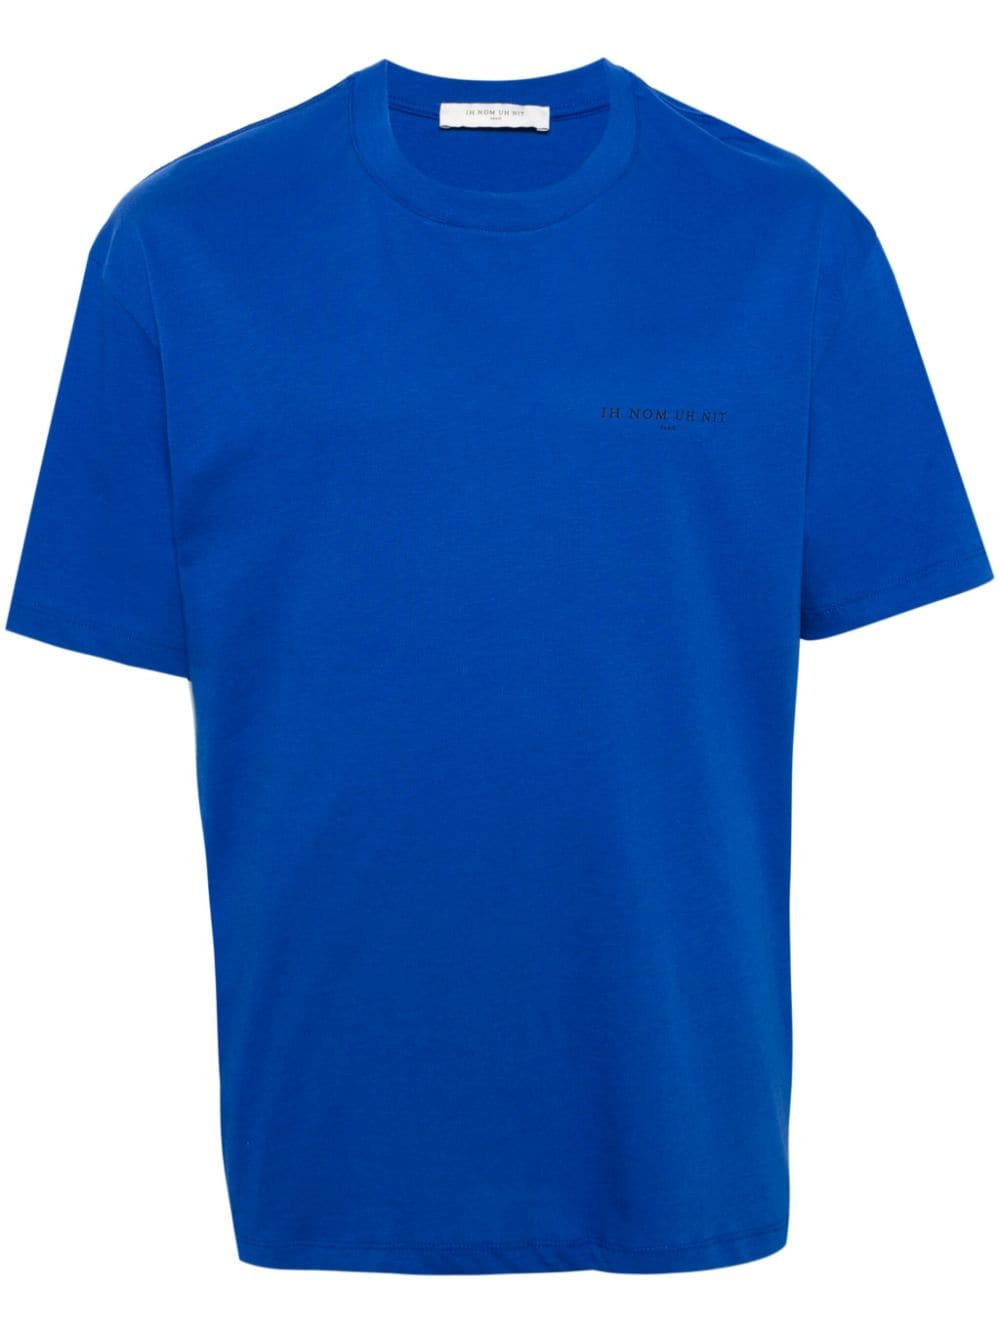 T-shirt blu royal con scritta logo